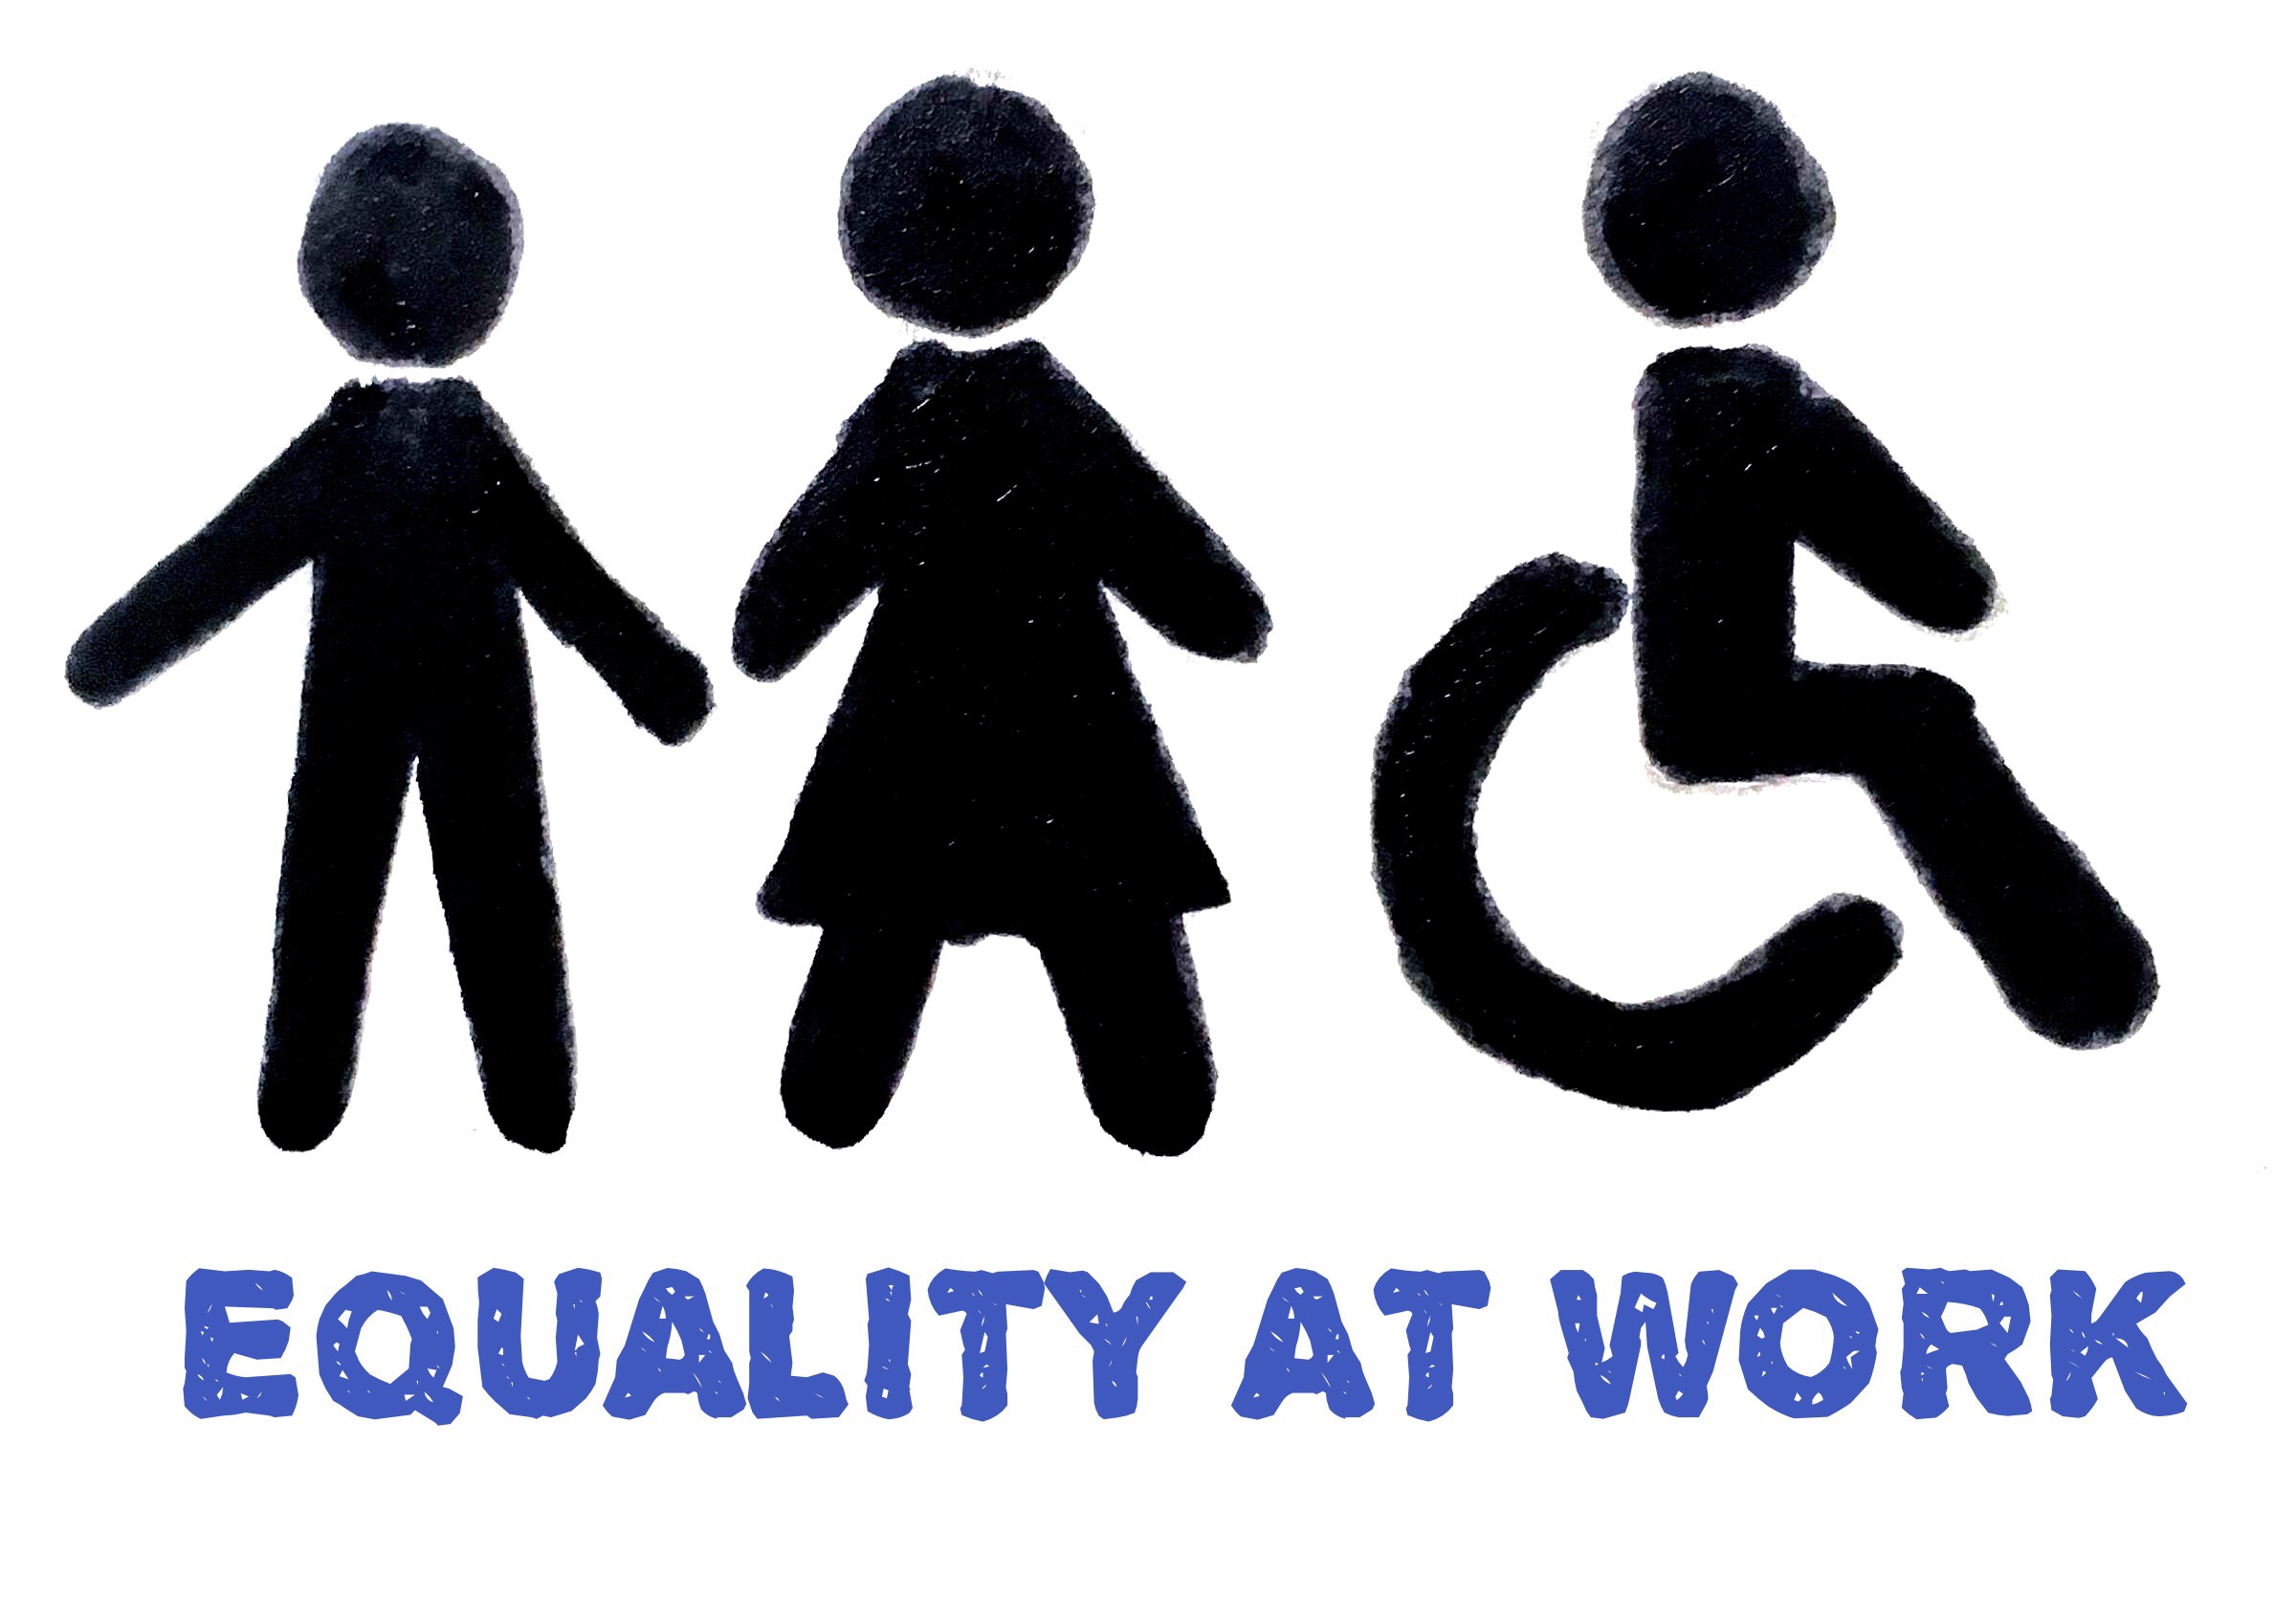 Equality at work illustration.